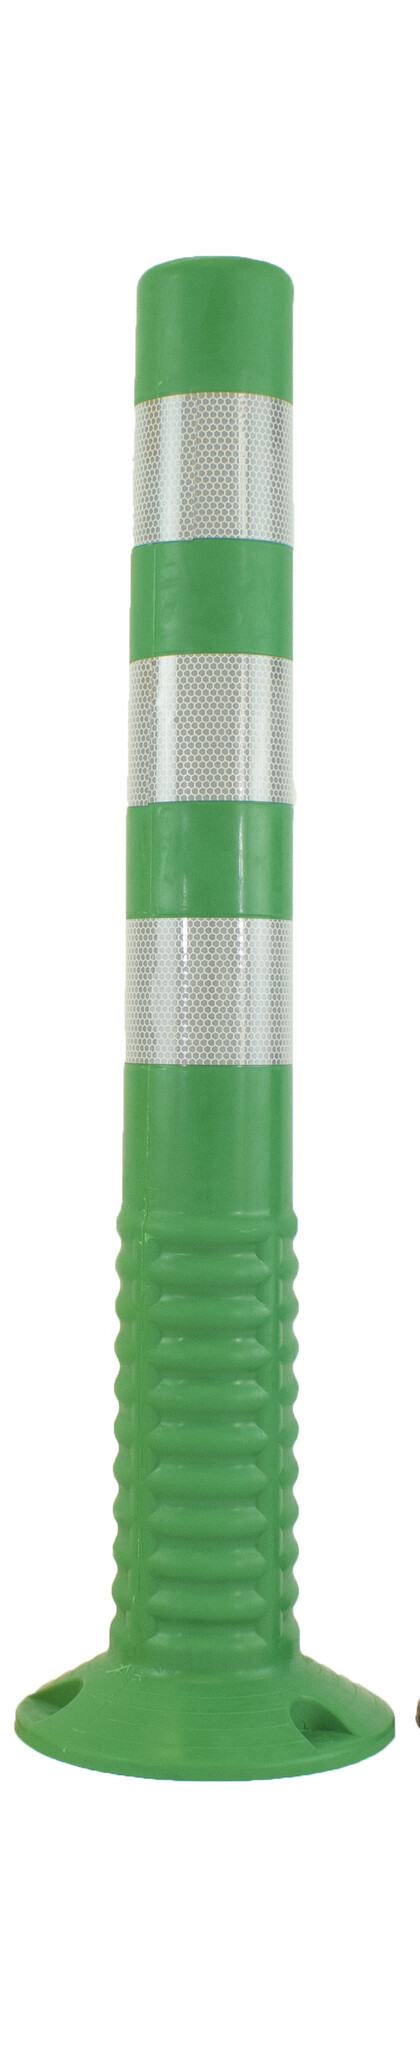 Plooibaken T-FLEX groen 75 cm